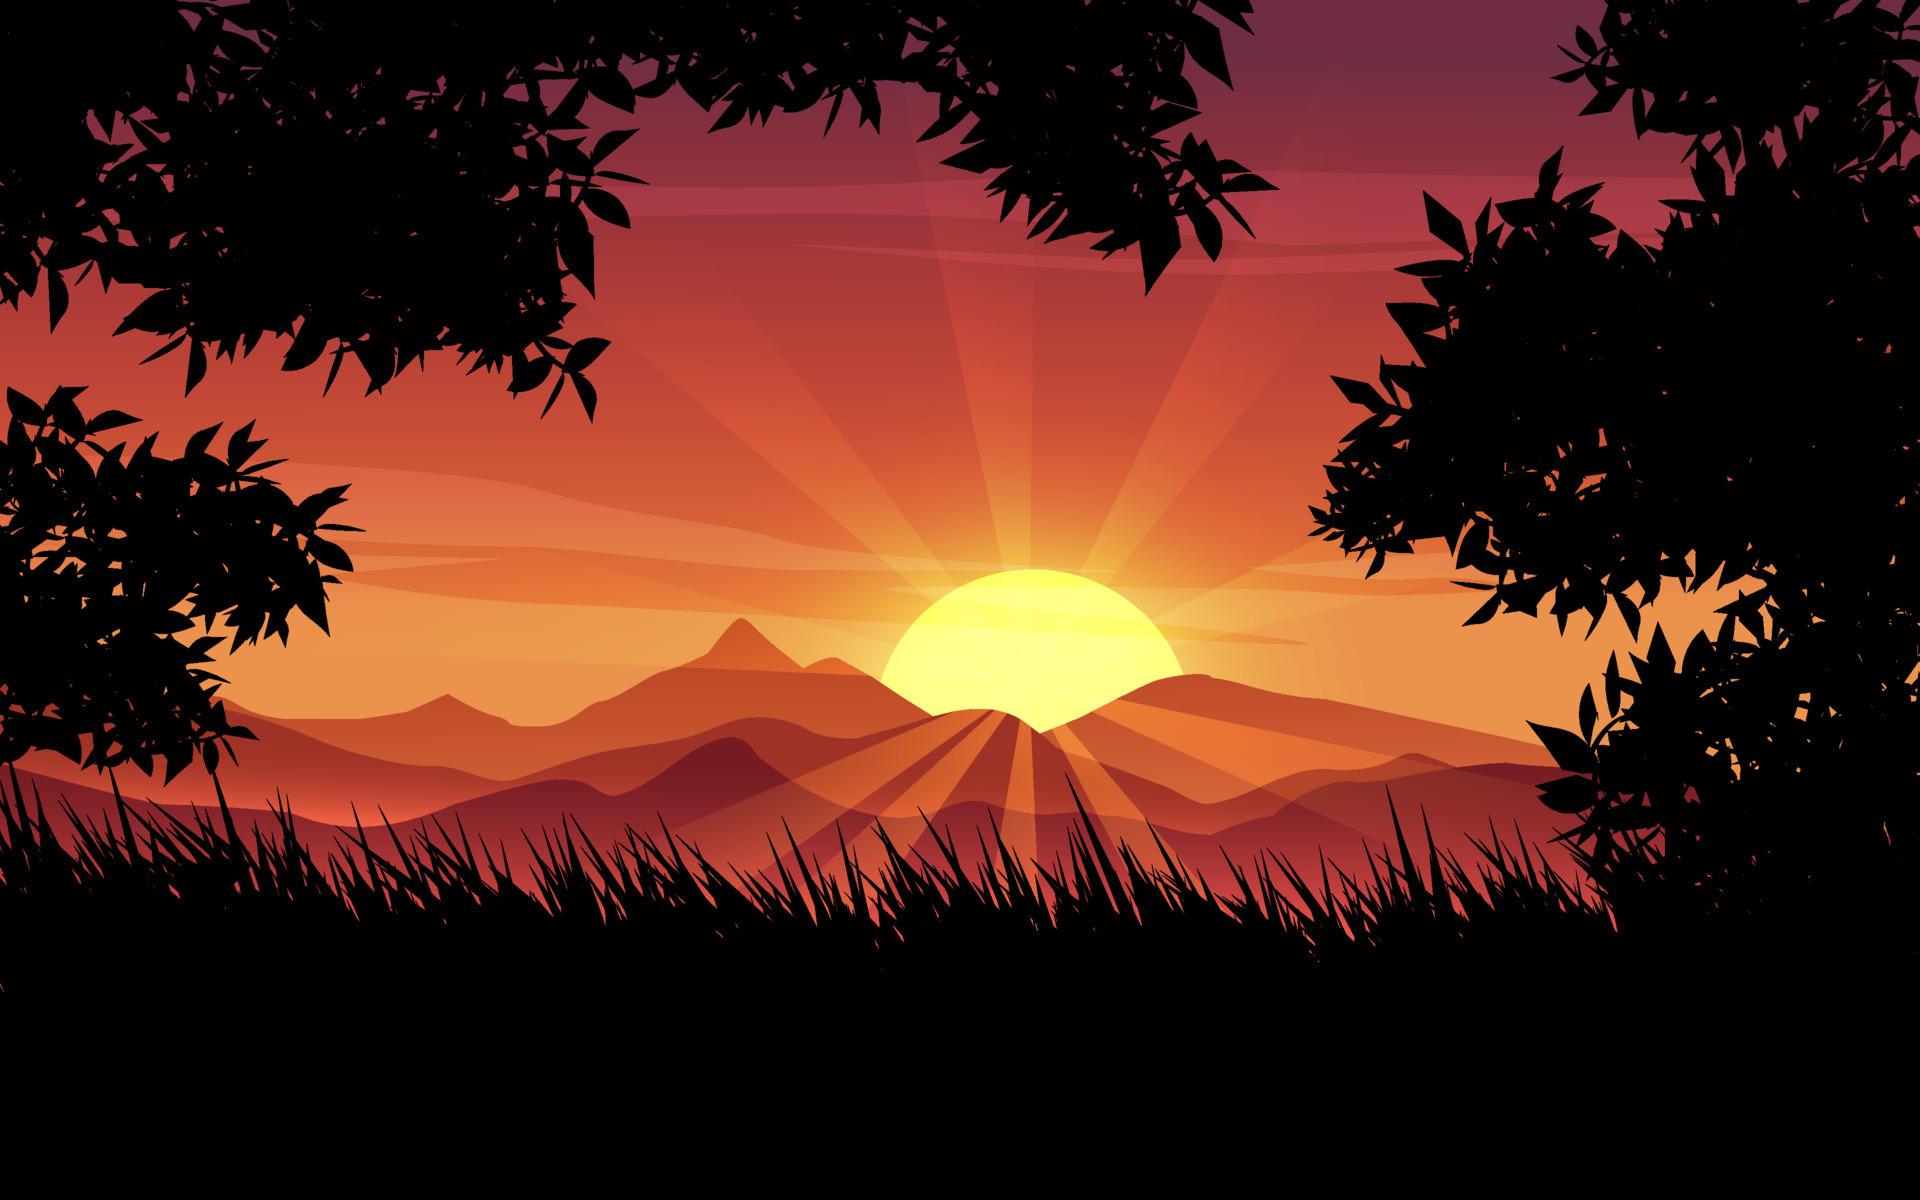 Sunrise illustration over mountains